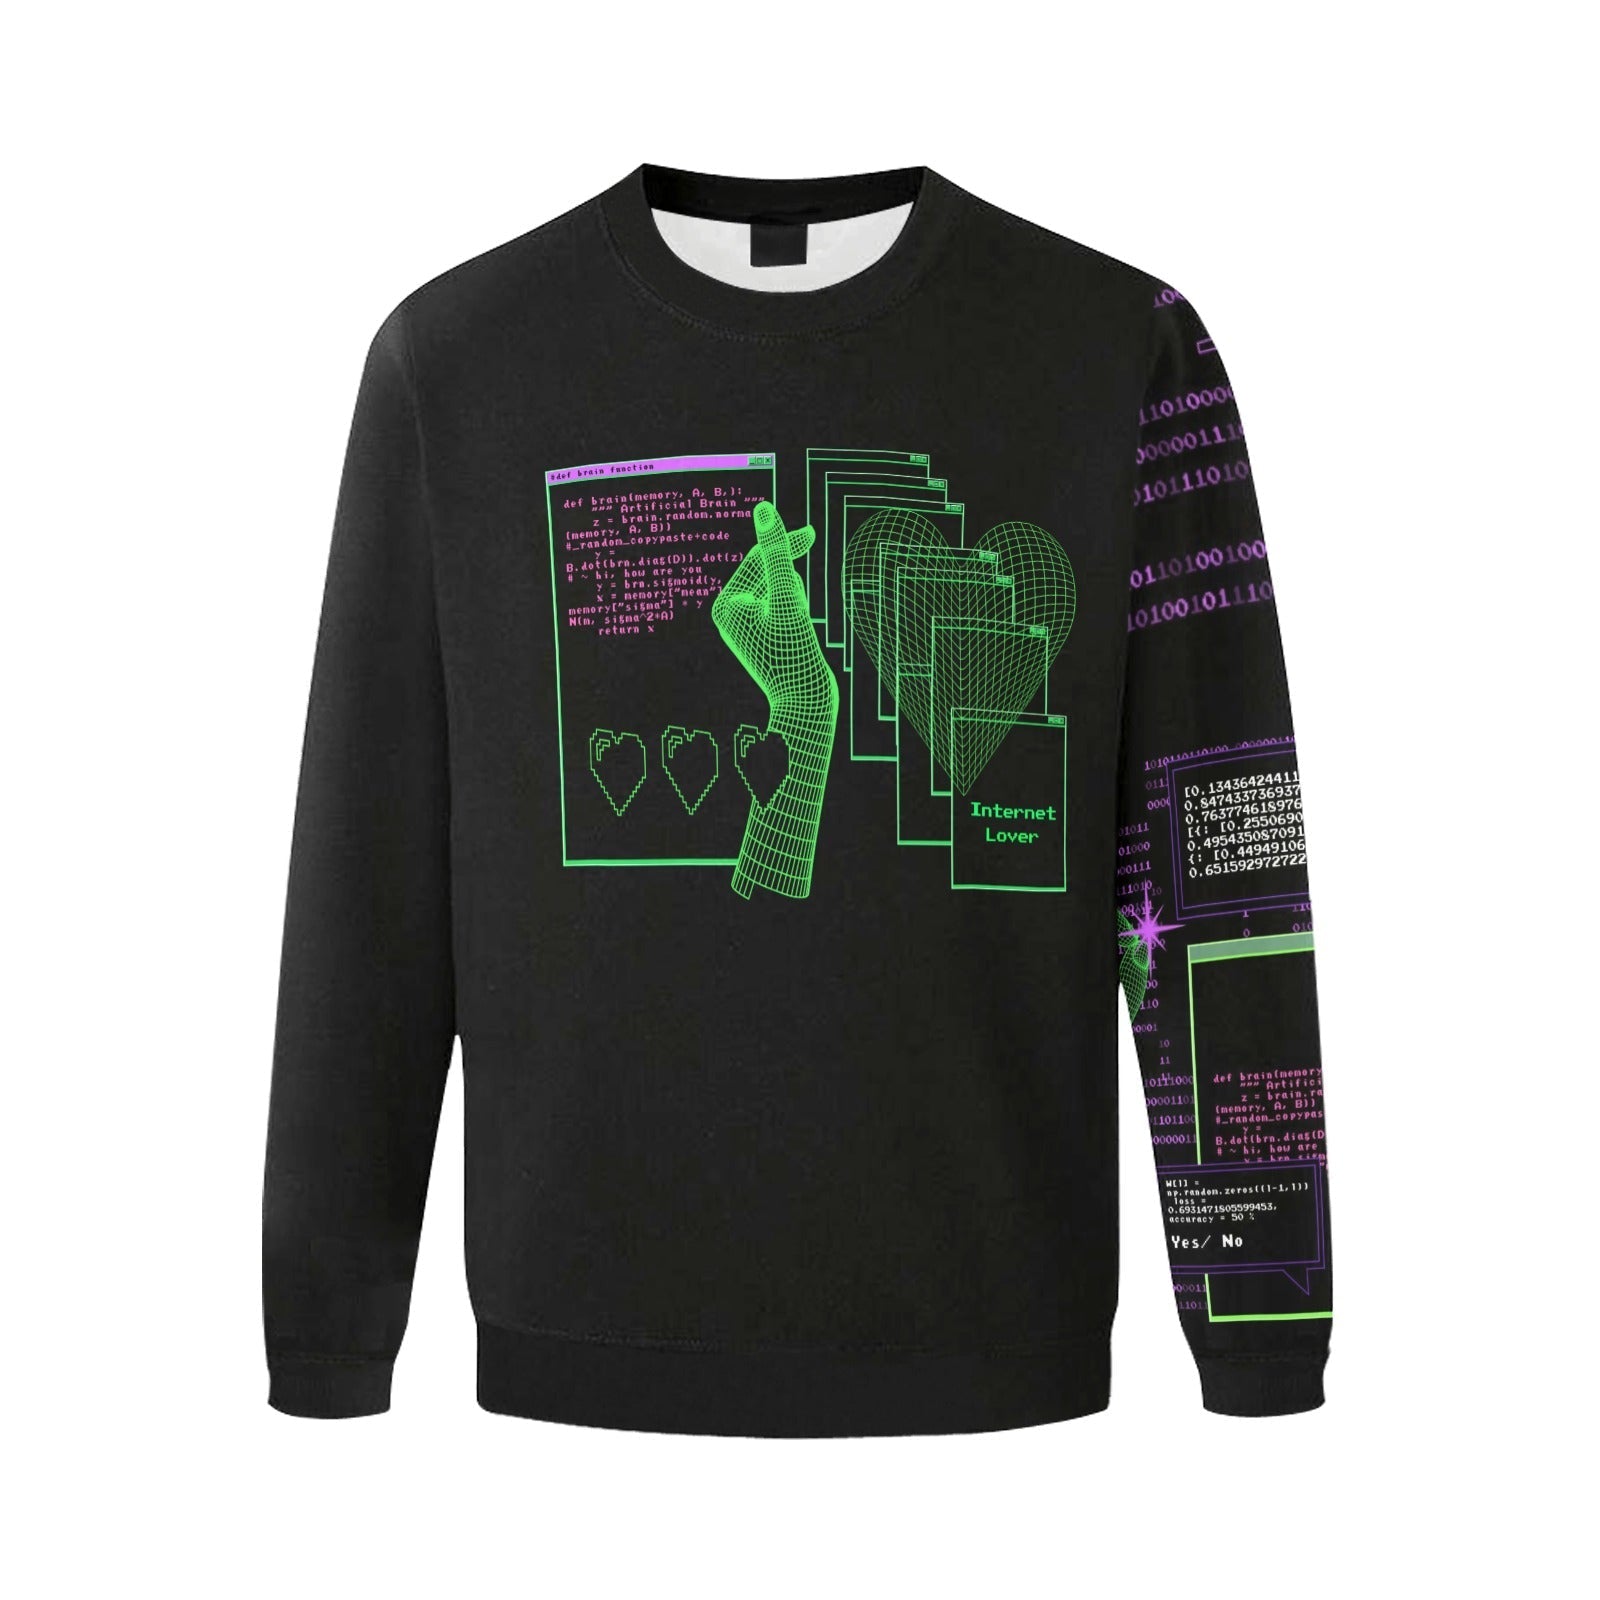 Internet Lover Sweatshirt - In Control Clothing